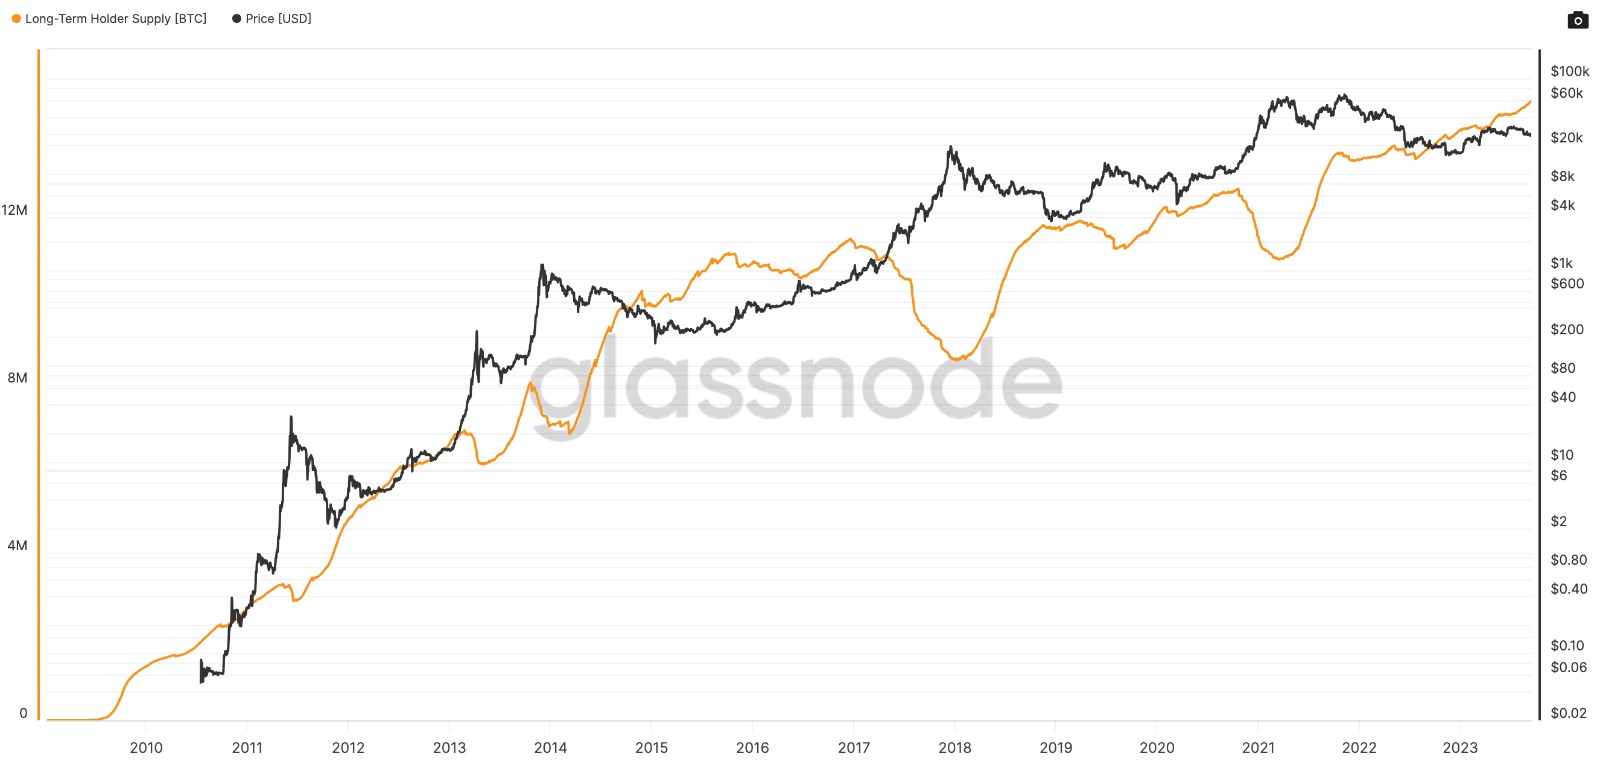 Bitcoin long-term holder supply vs price